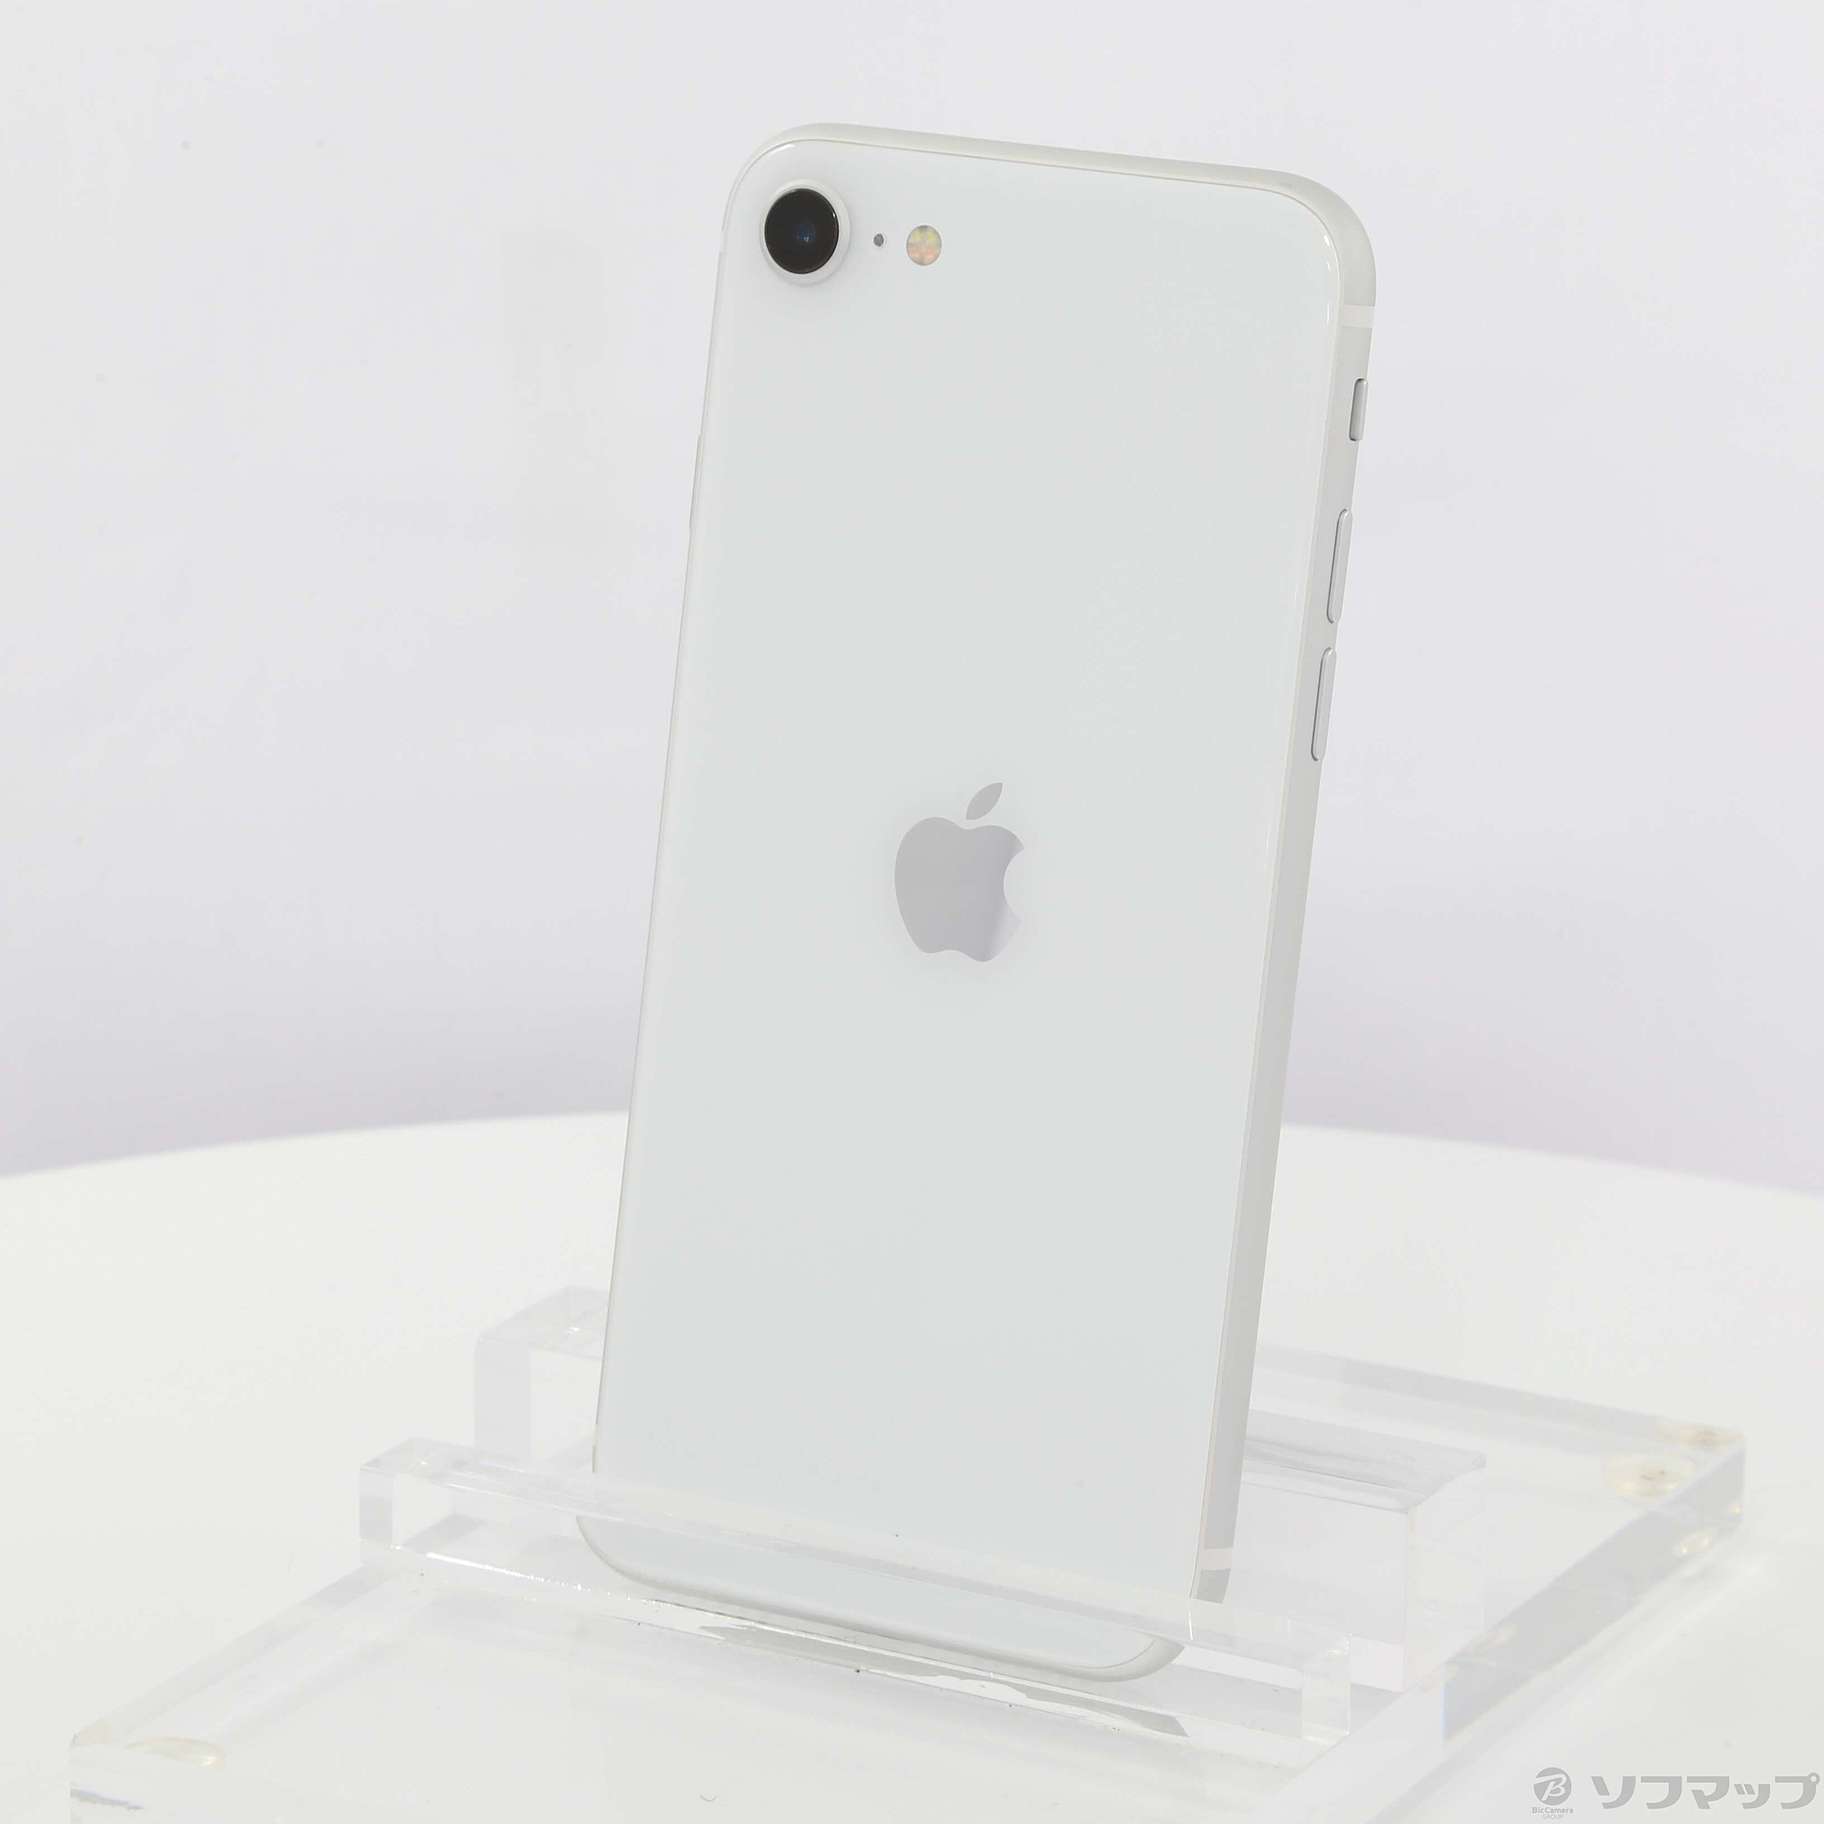 iPhone SE 第2世代 64GB SIMフリー ホワイト 未使用新品